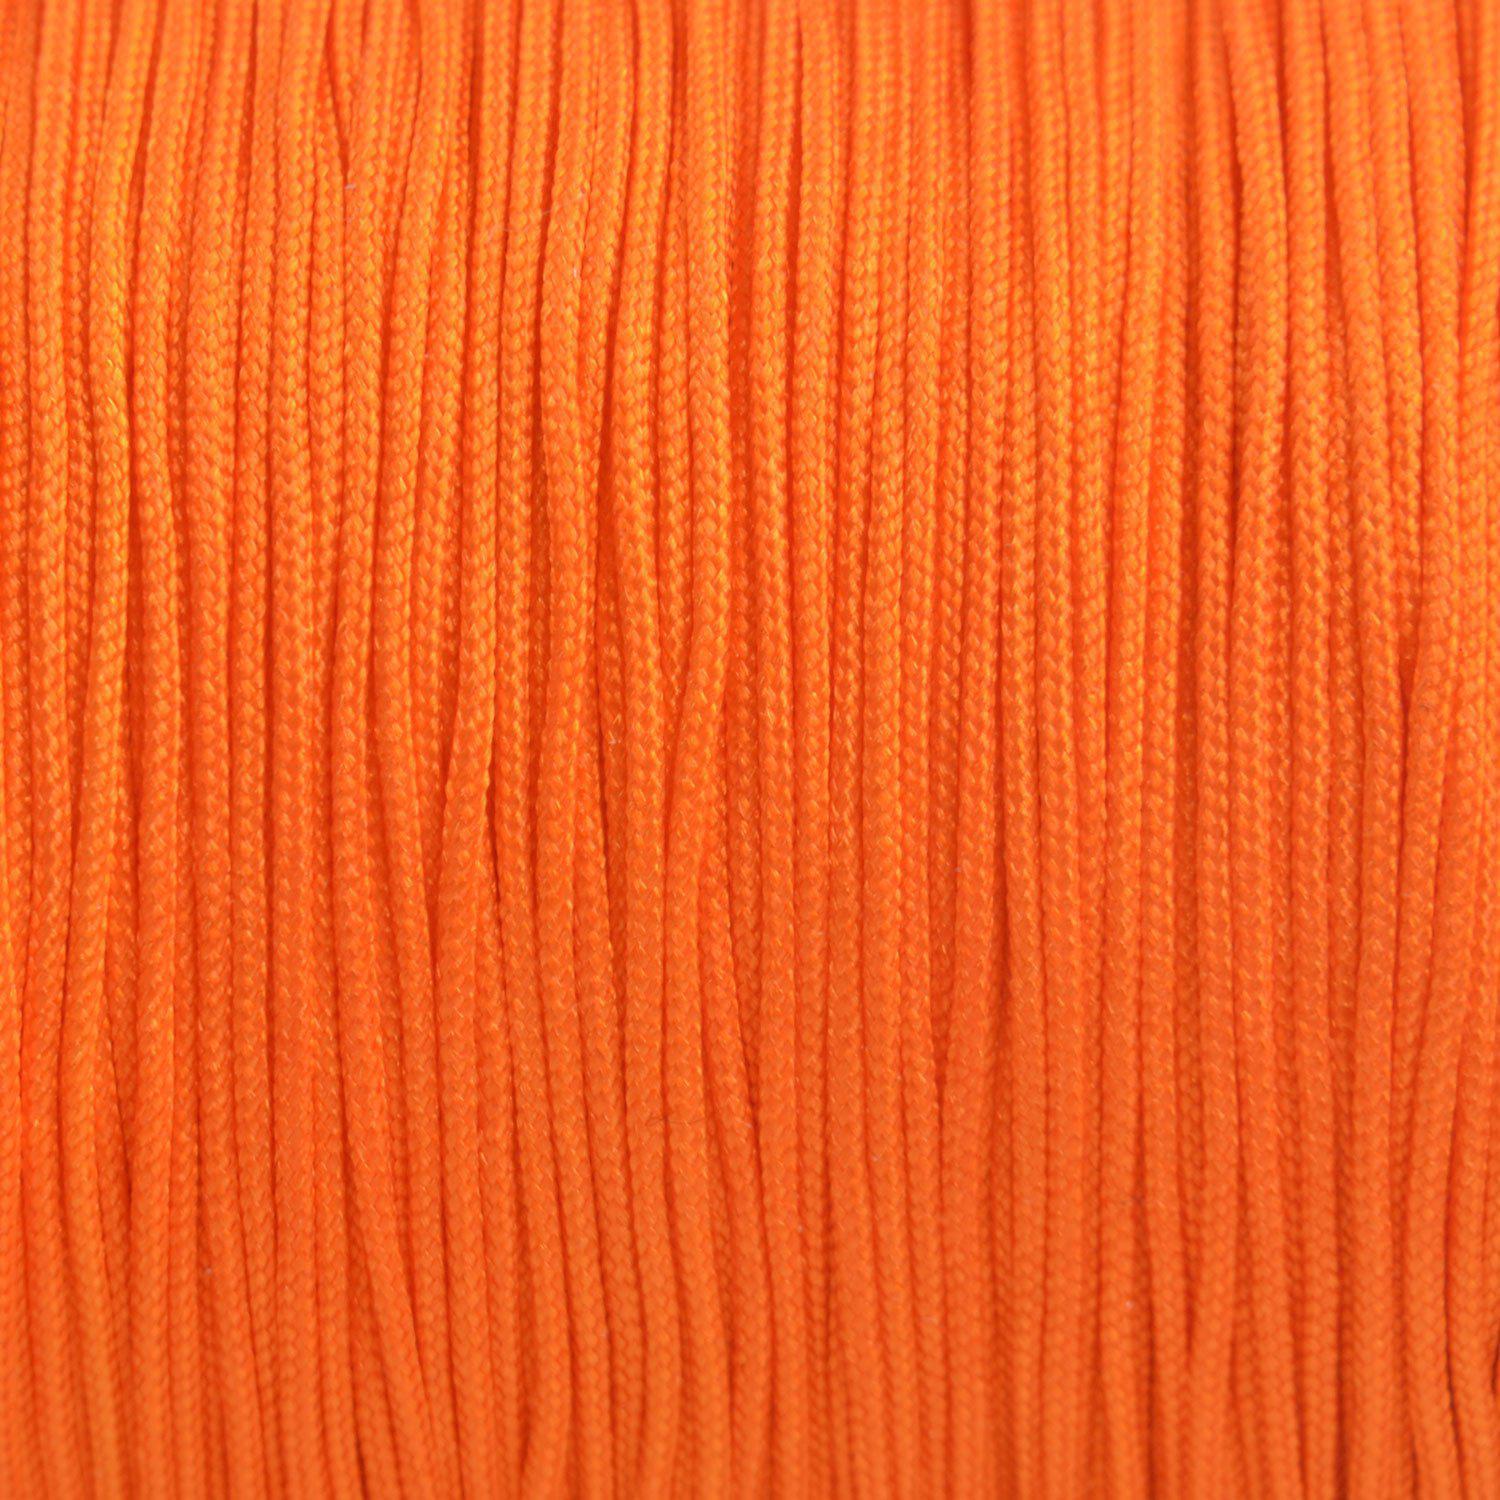 Nylon koord oranje 0.8mm - 6 meter-Kraaltjes van Renate